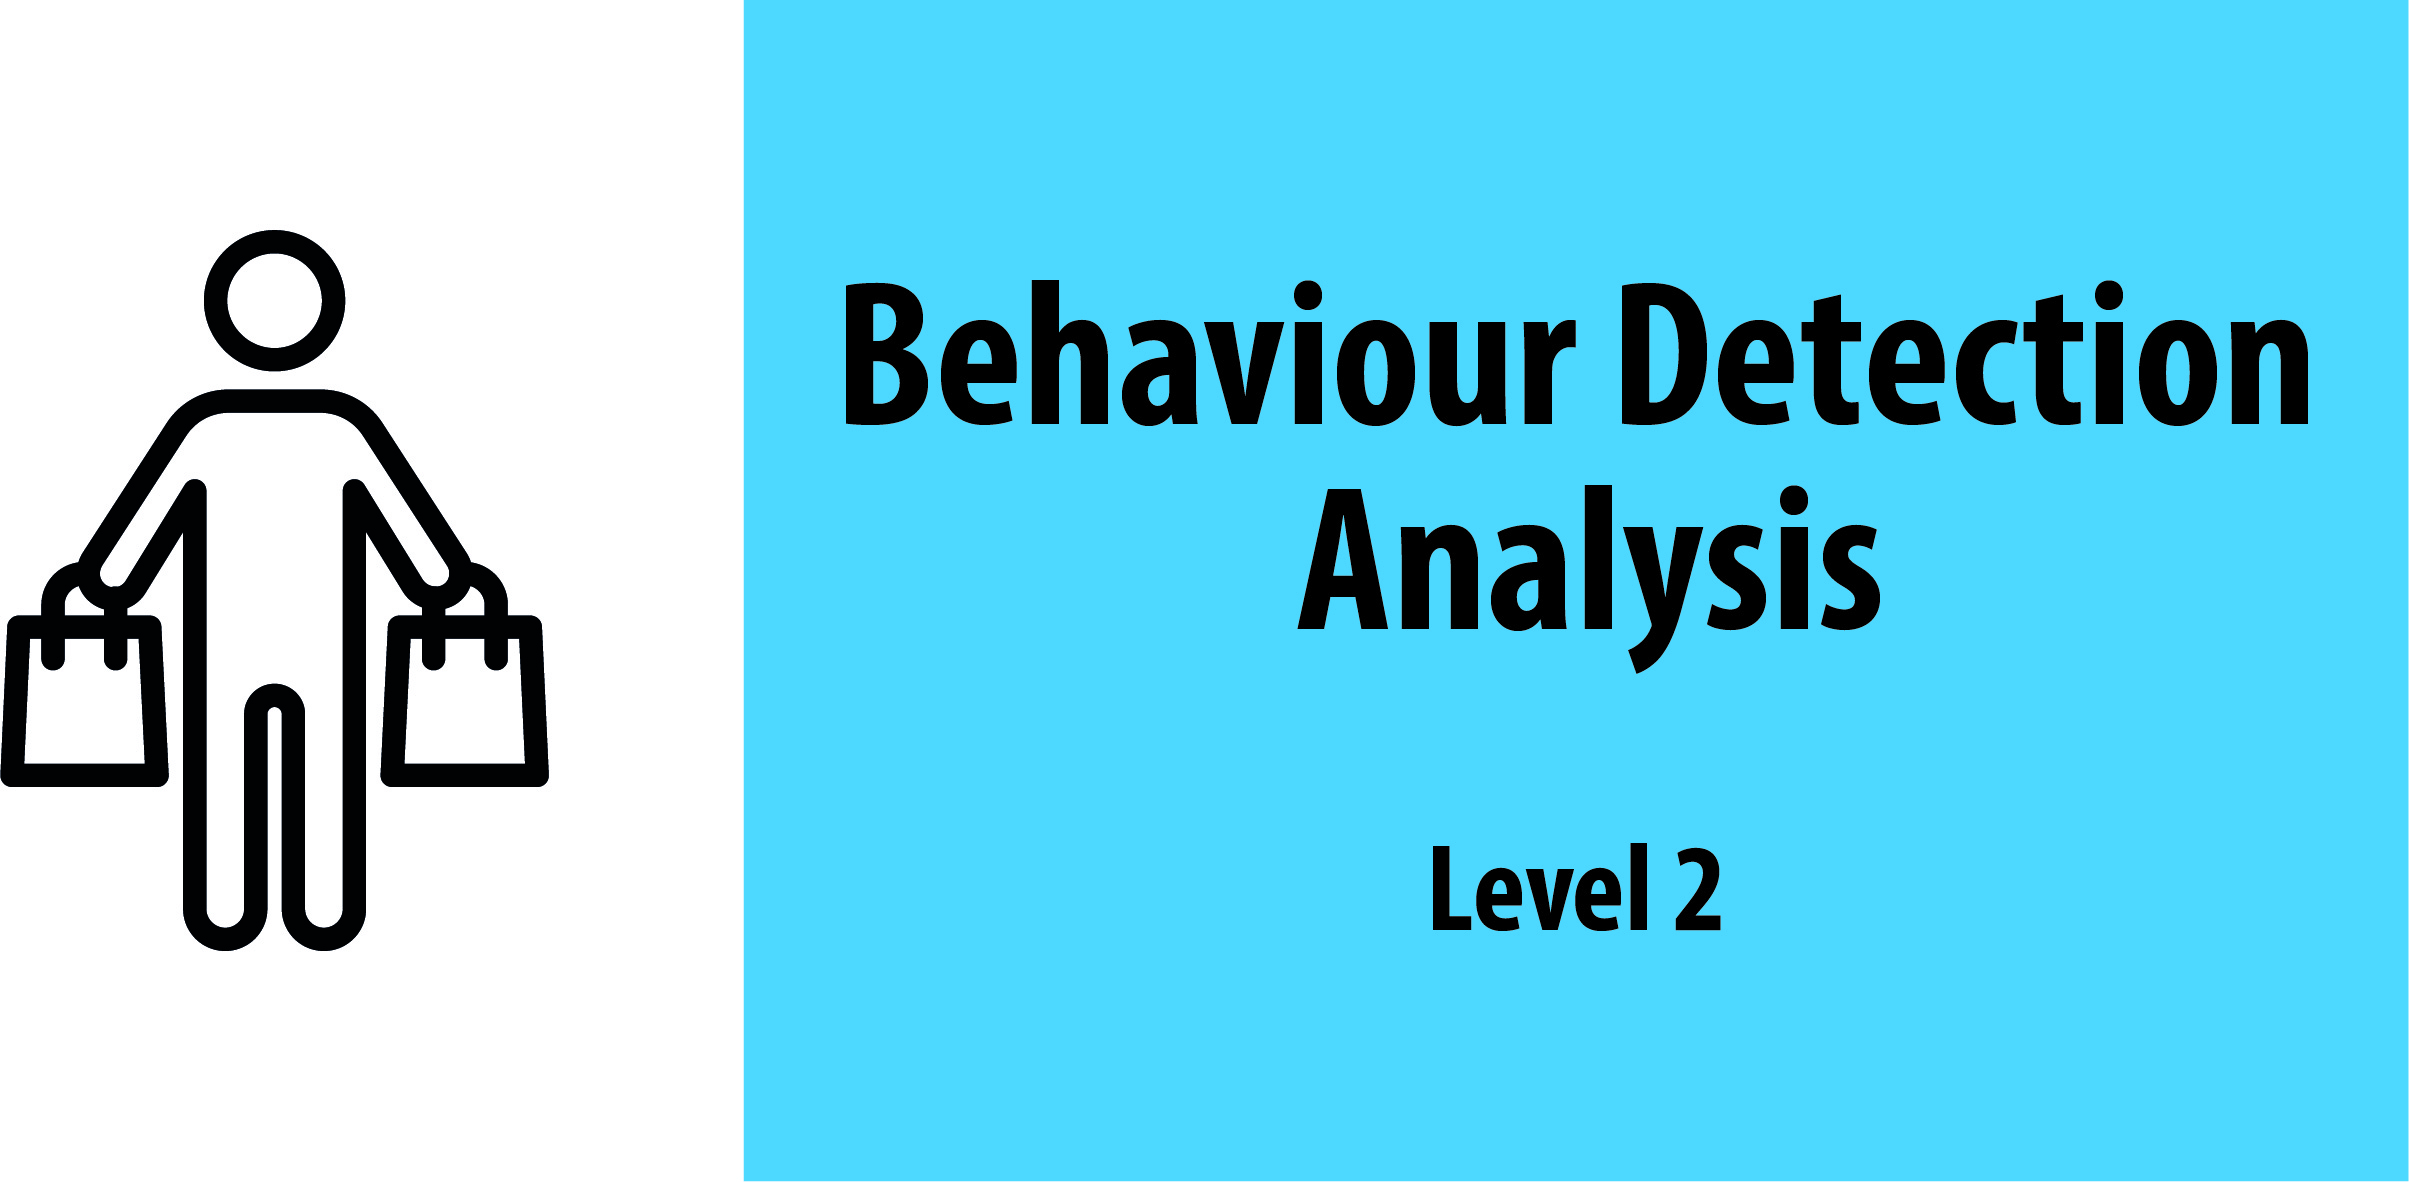 Behaviour Detection Analysis